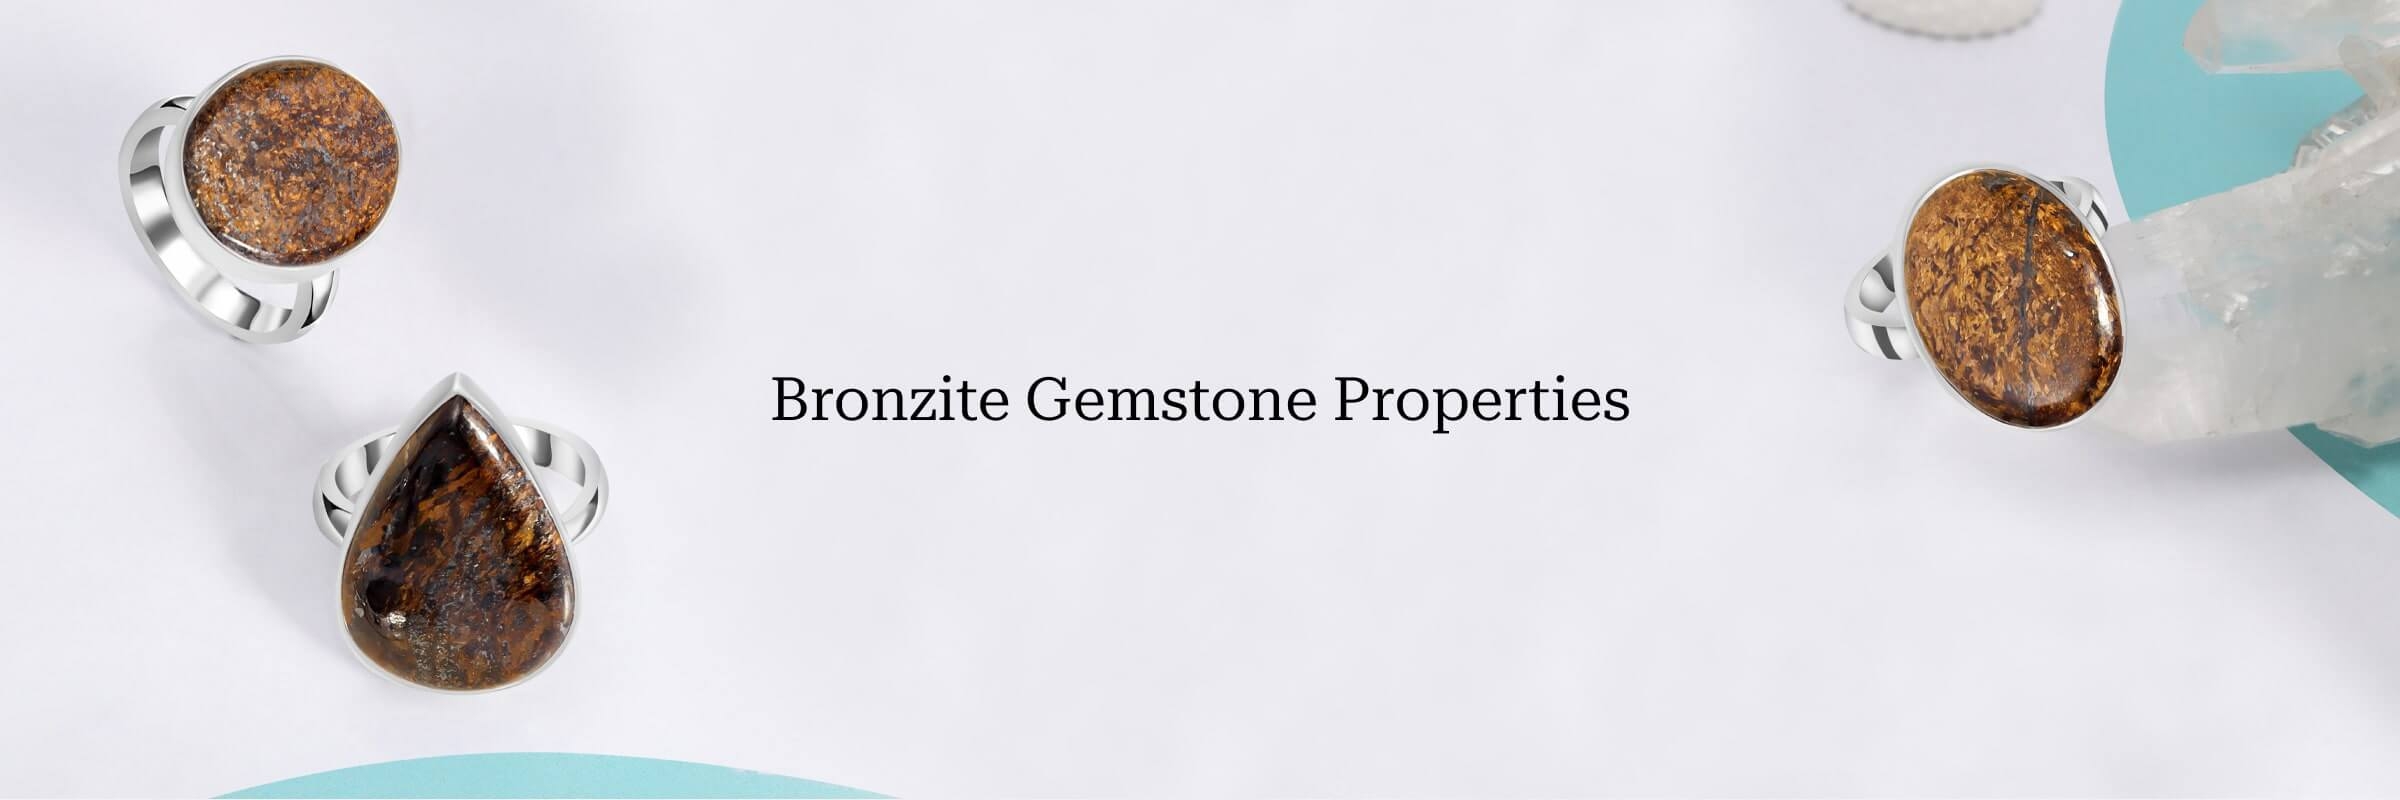 Healing properties of Bronzite 